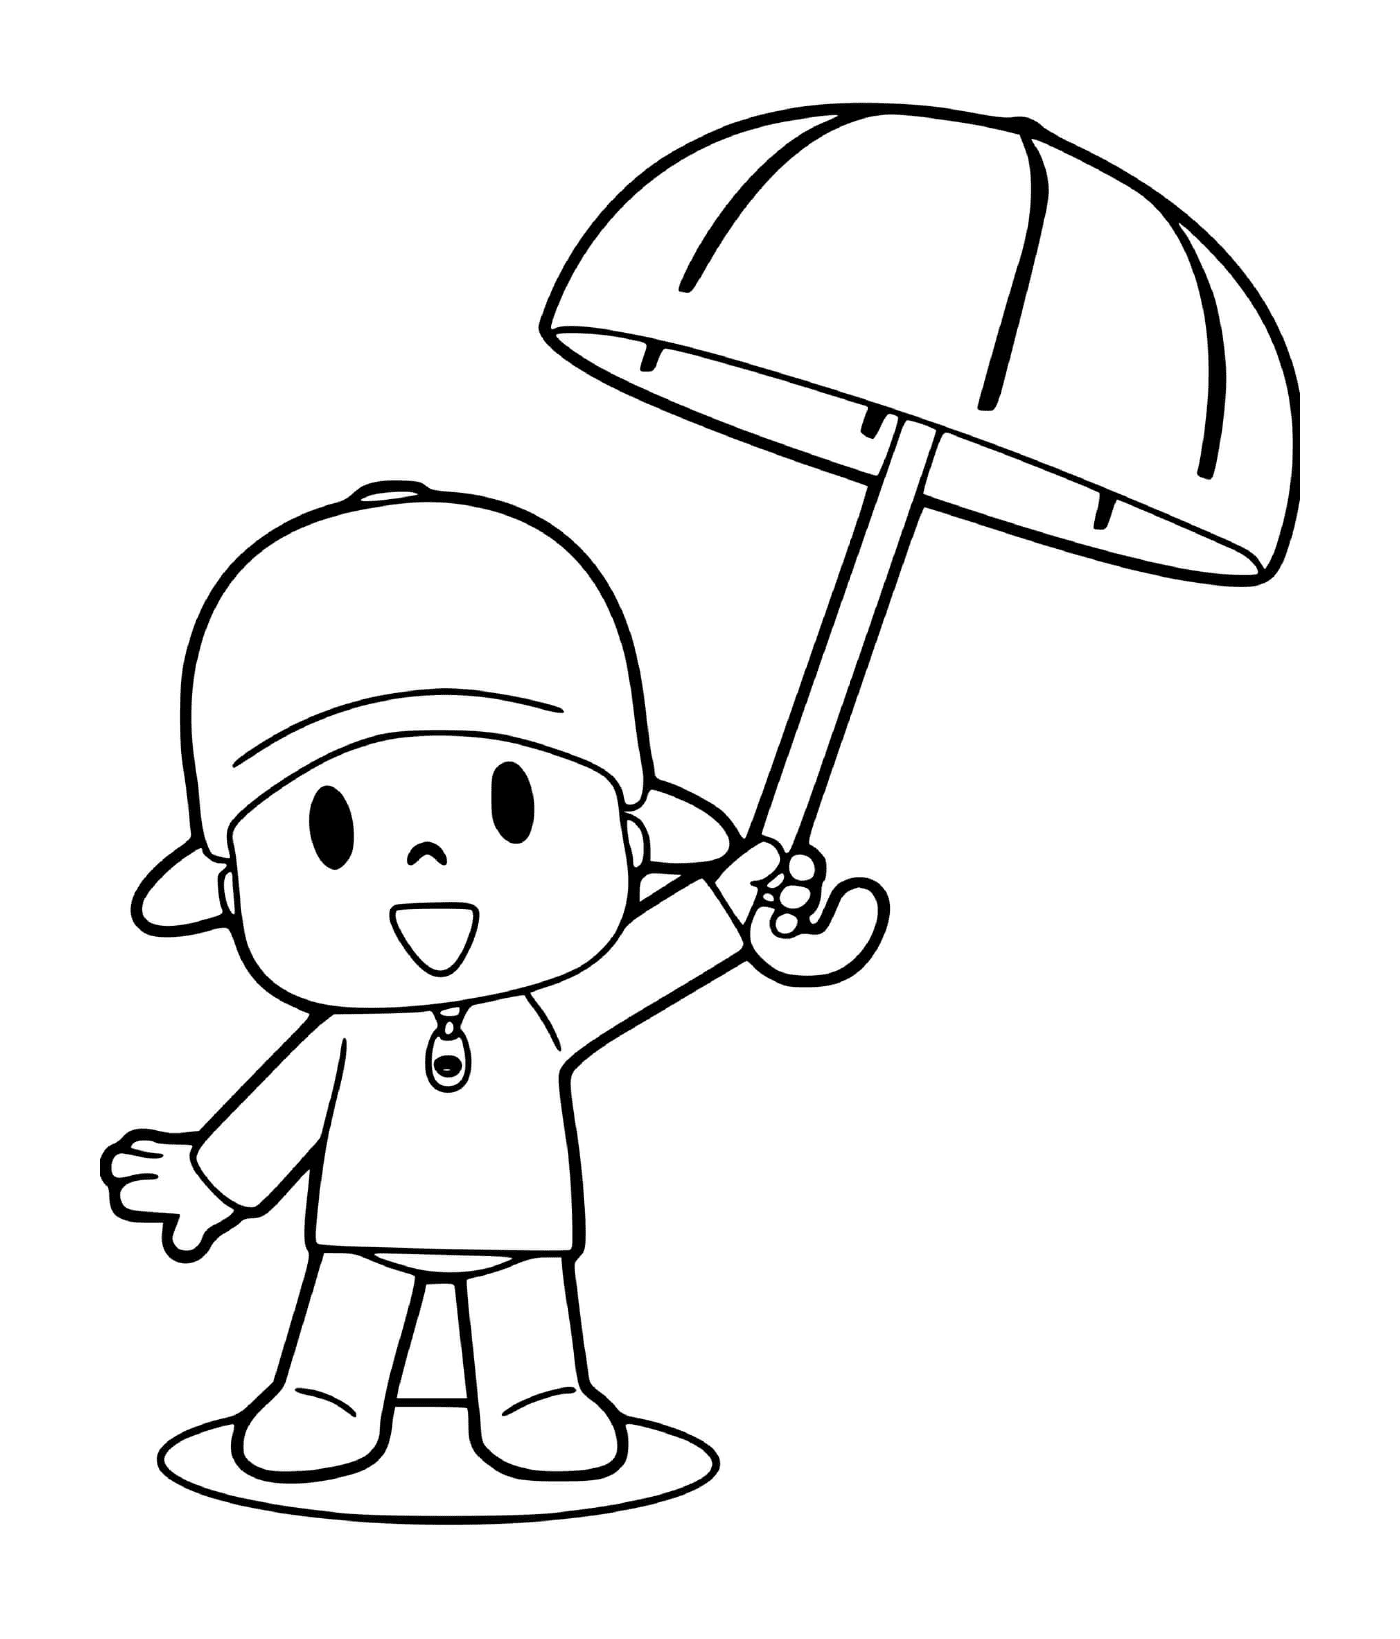   Garçon avec parapluie 